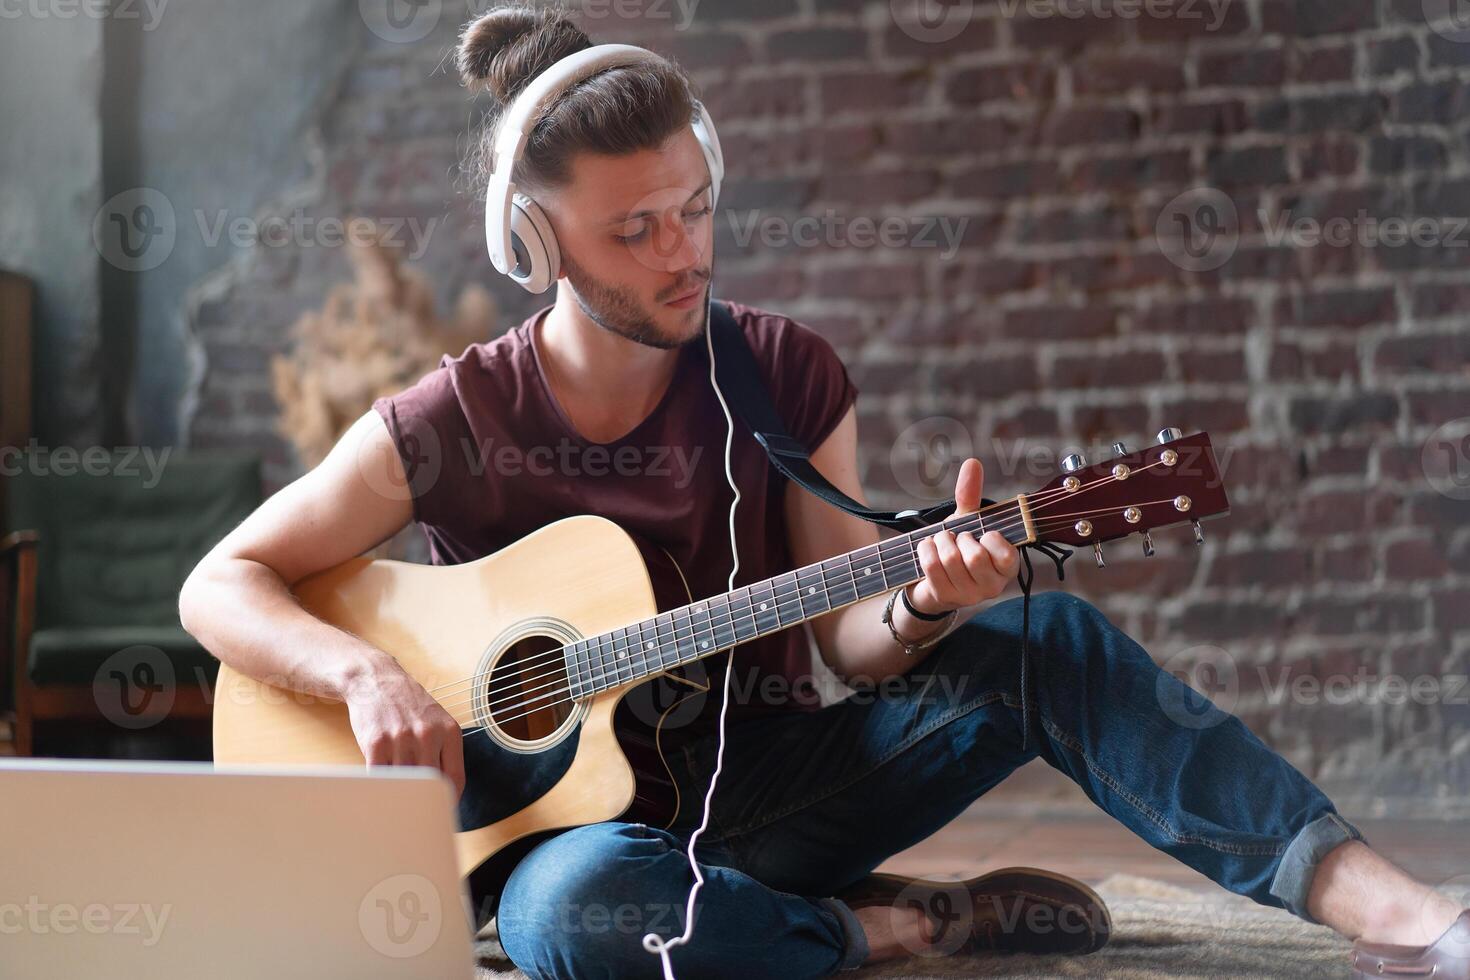 caucásico joven adulto aprendizaje guitarra en línea música clase con distante profesor computadora móvil dispositivo foto